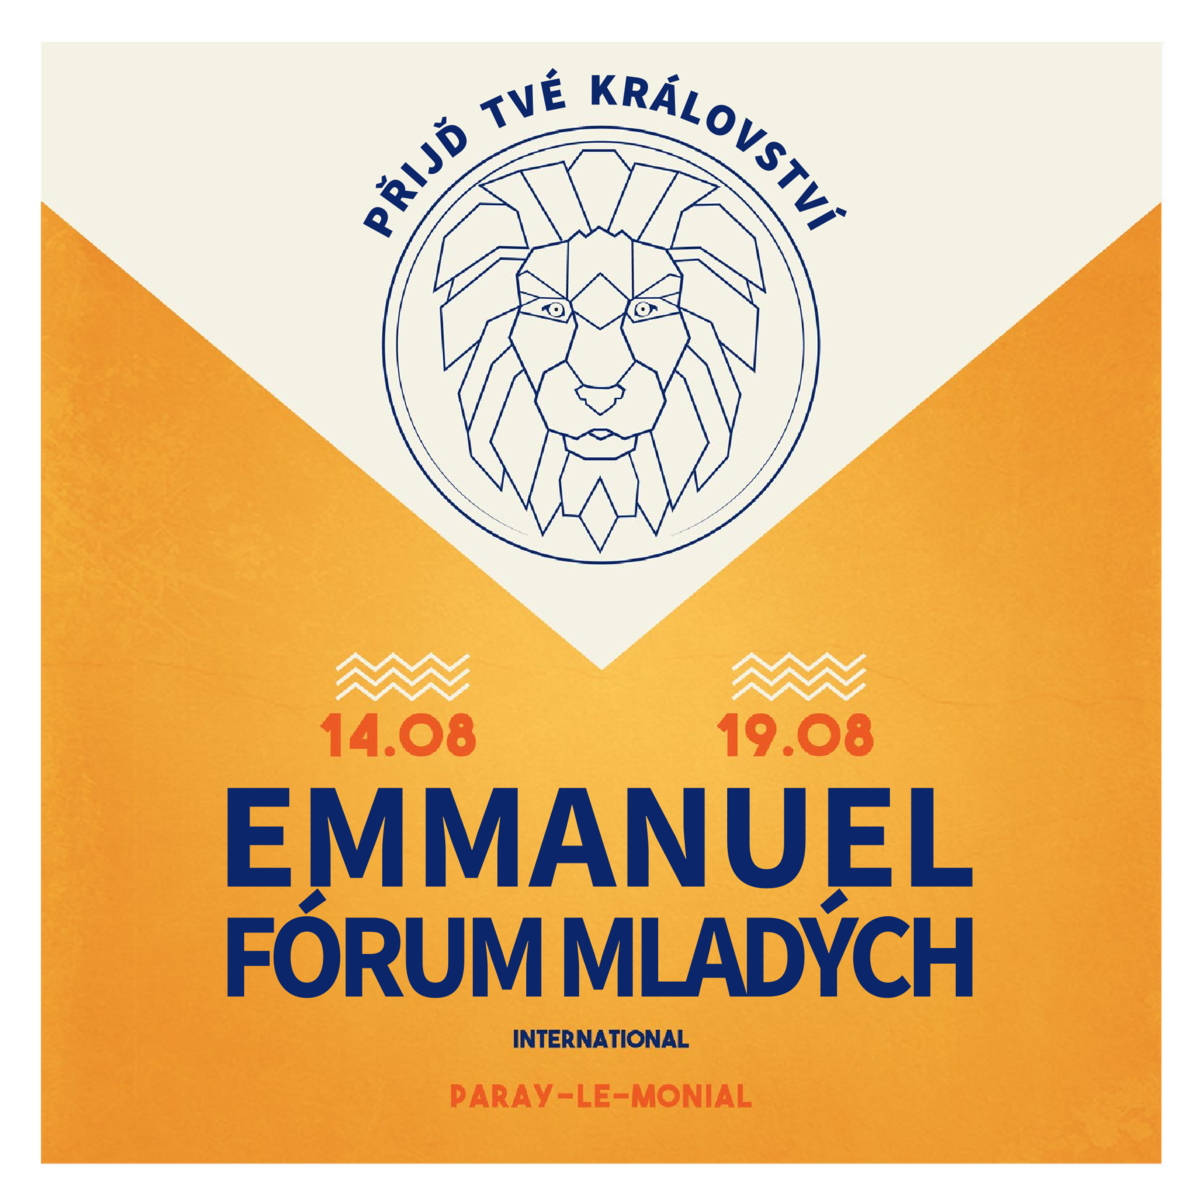 Pozvánka na fórum mladých s komunitou Emmanuel